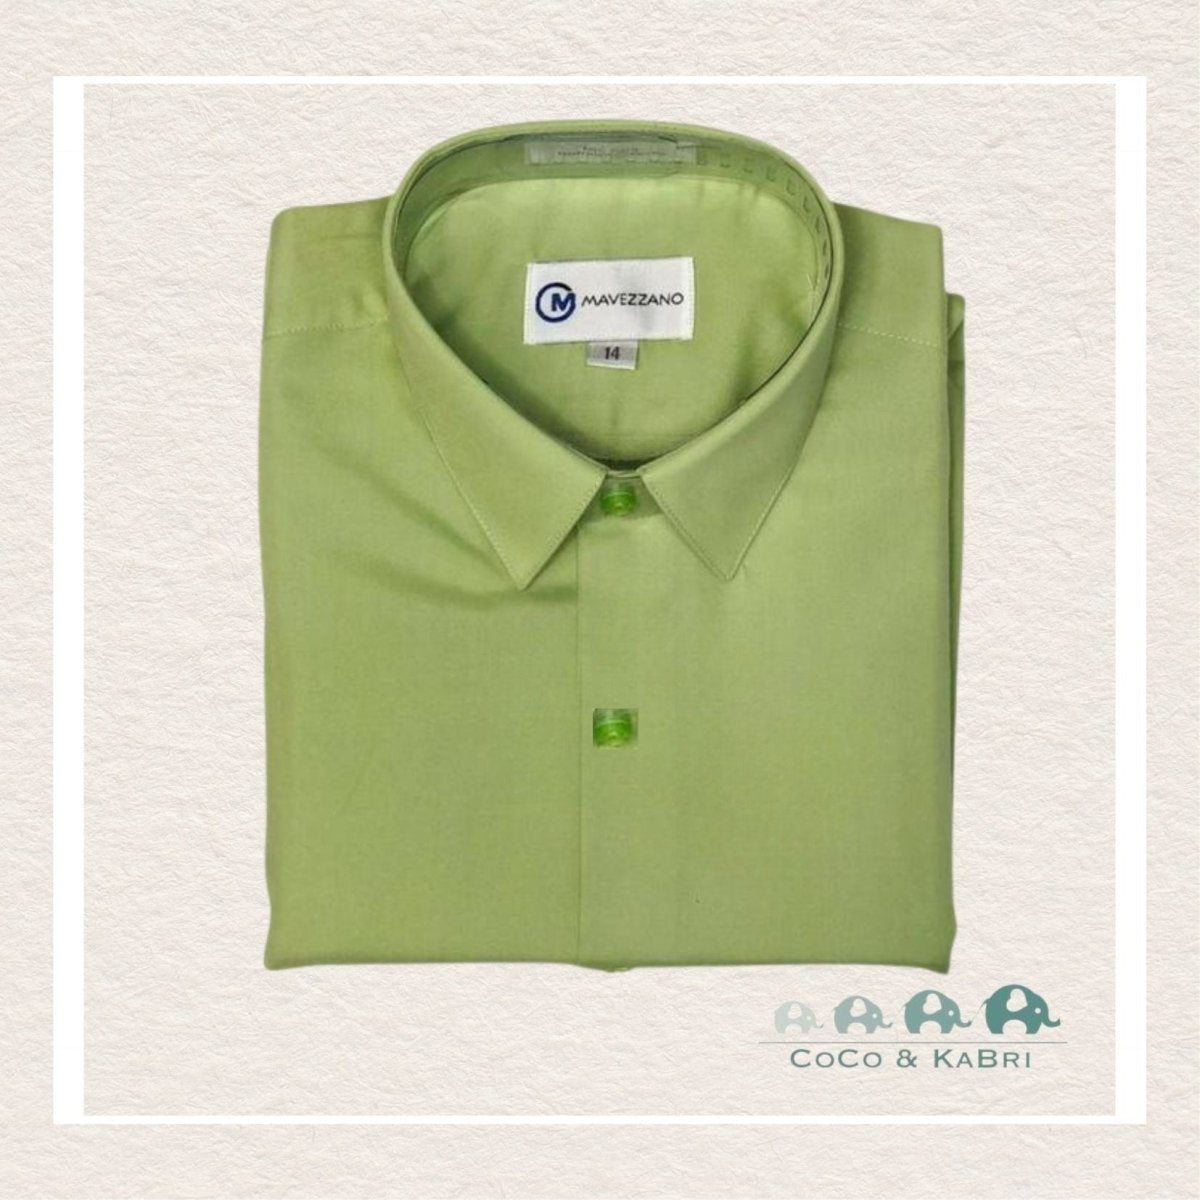 Mavezzano Dress Shirt: Sage Green, Dress Shirt, CoCo & KaBri, Children's Boutique